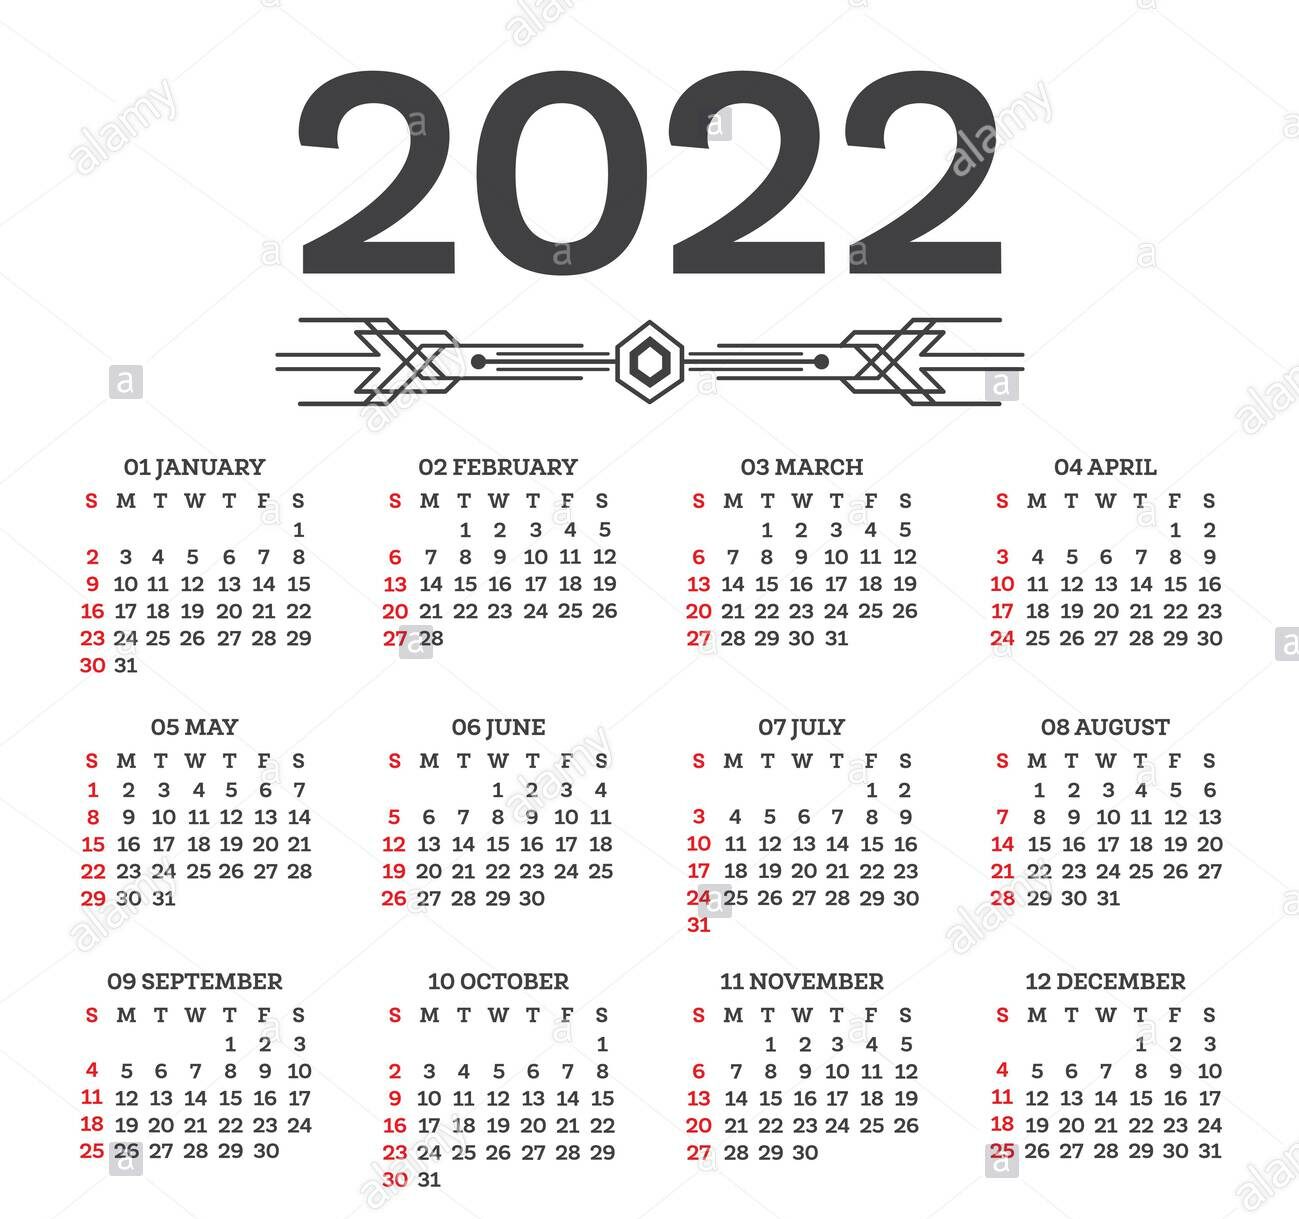 Calendario 2022 Com Feriados Brasileiros Calendario Dicembre